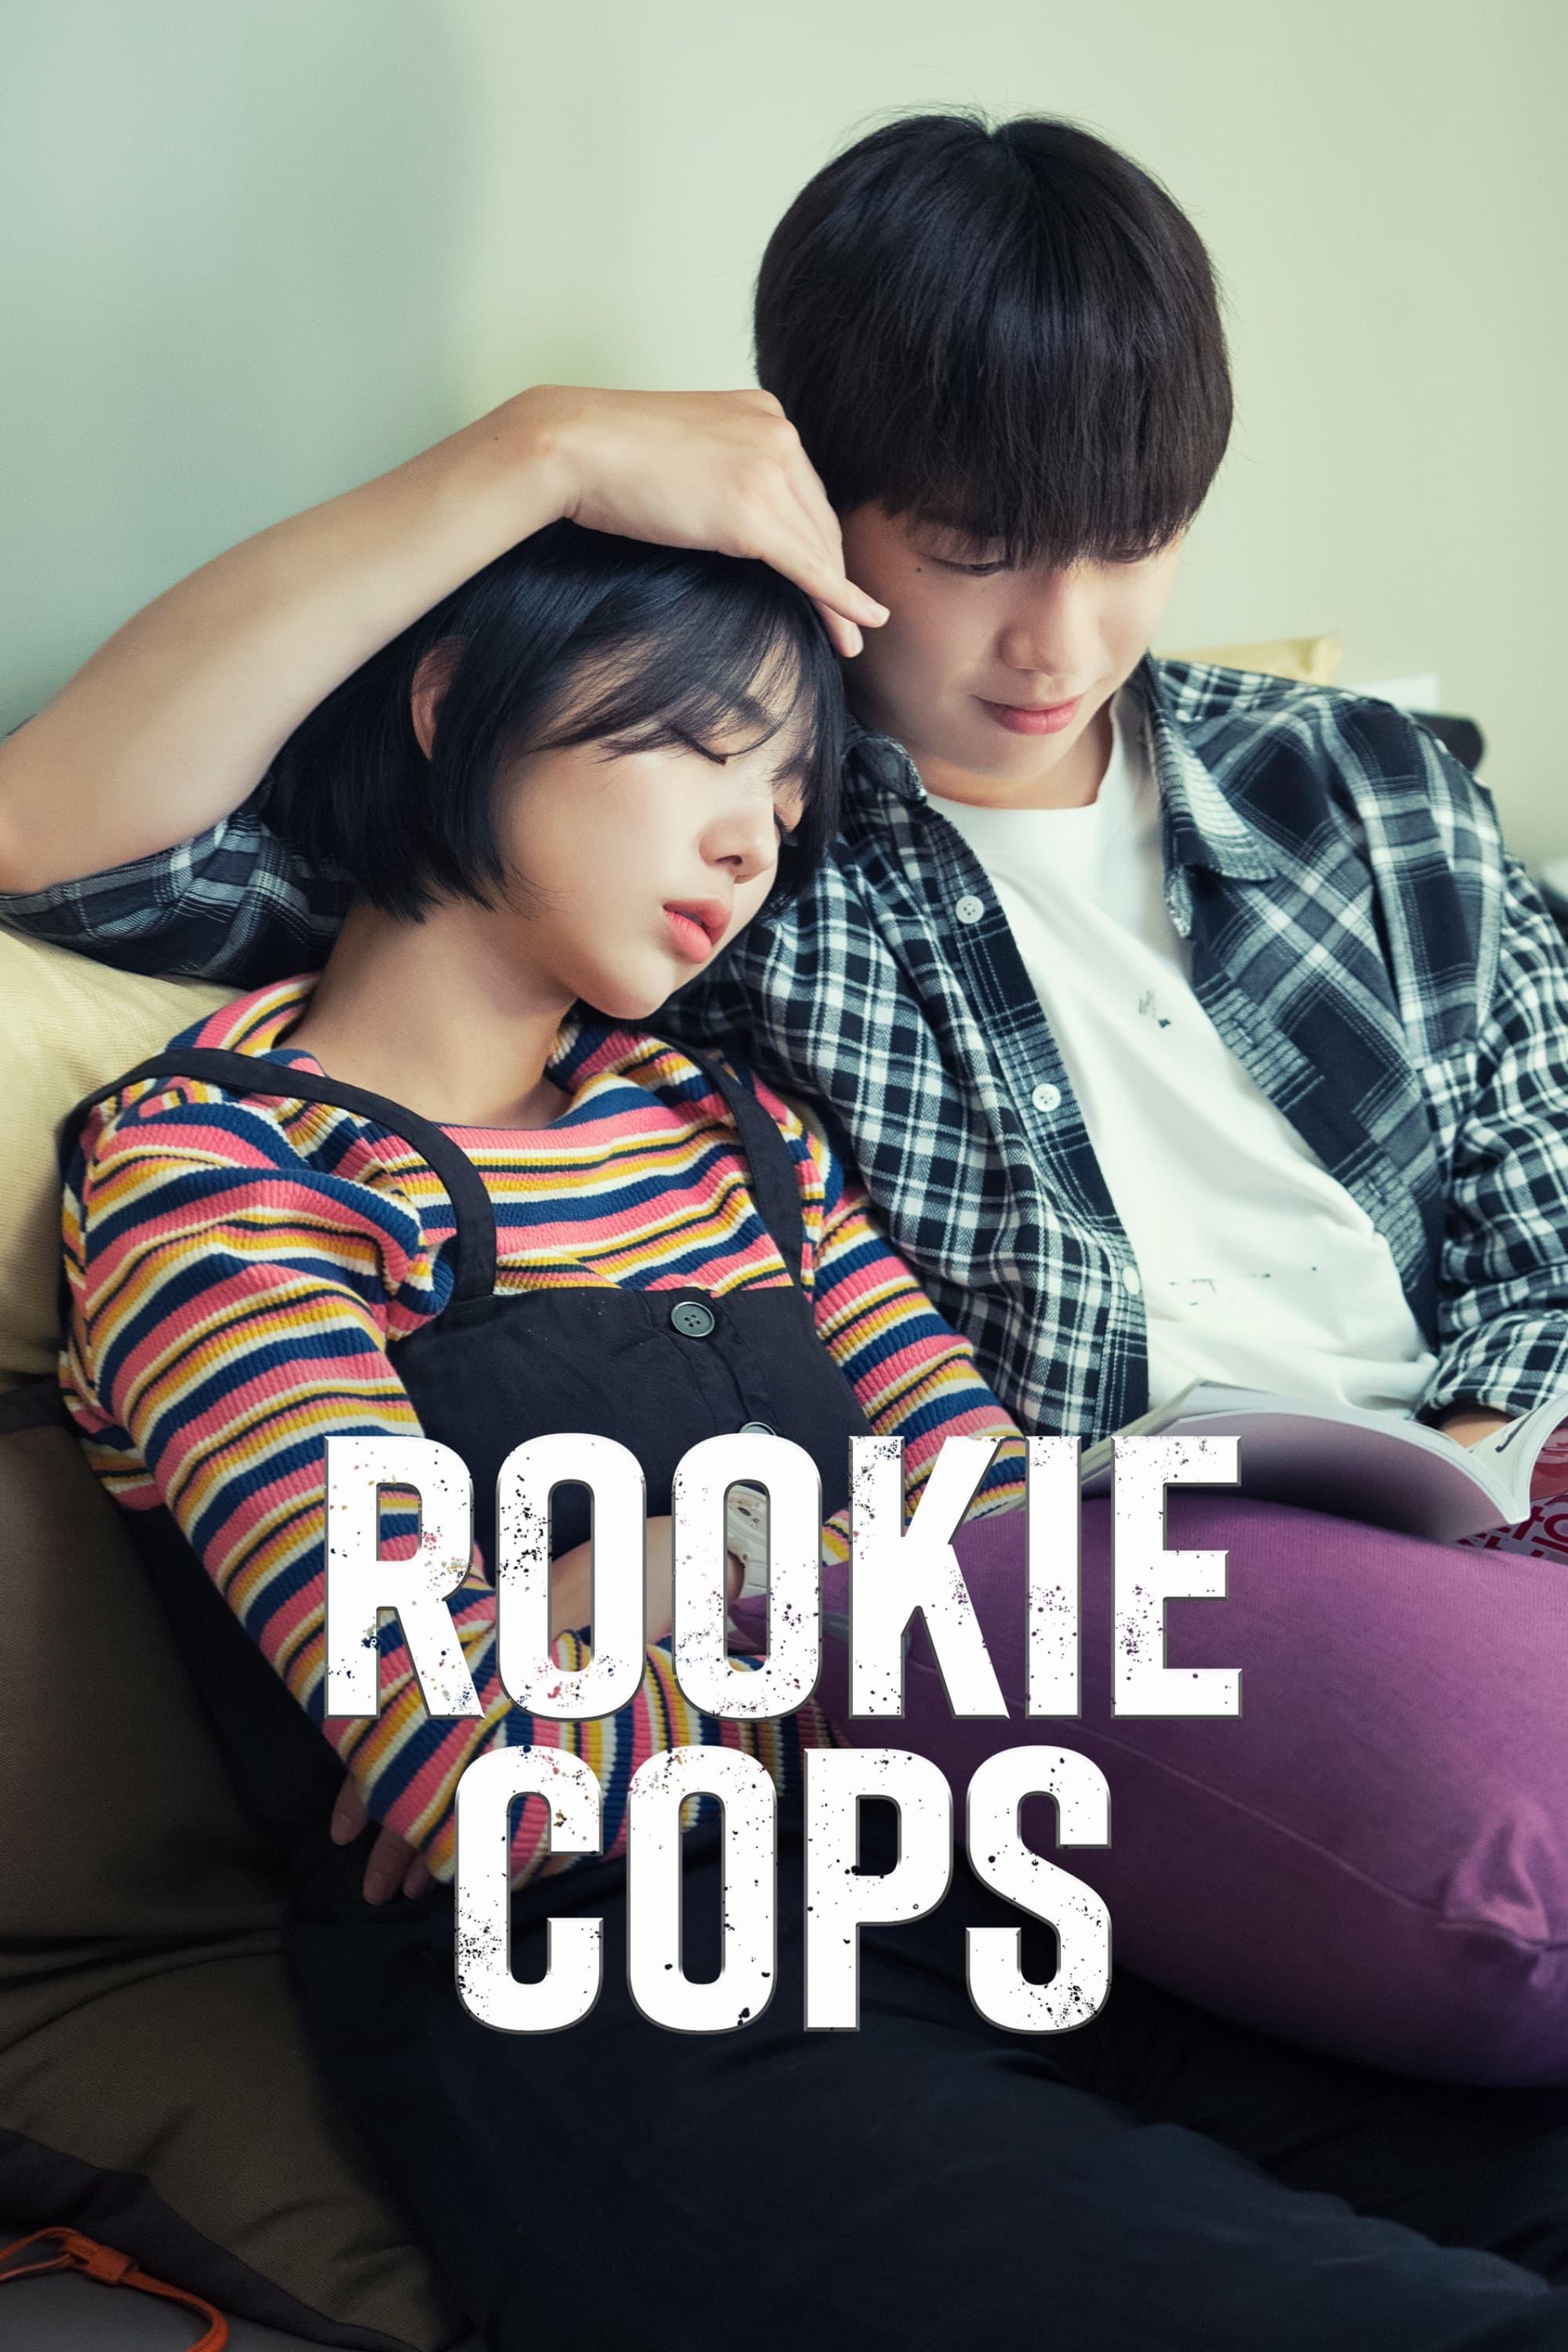 Rookie Cops poster